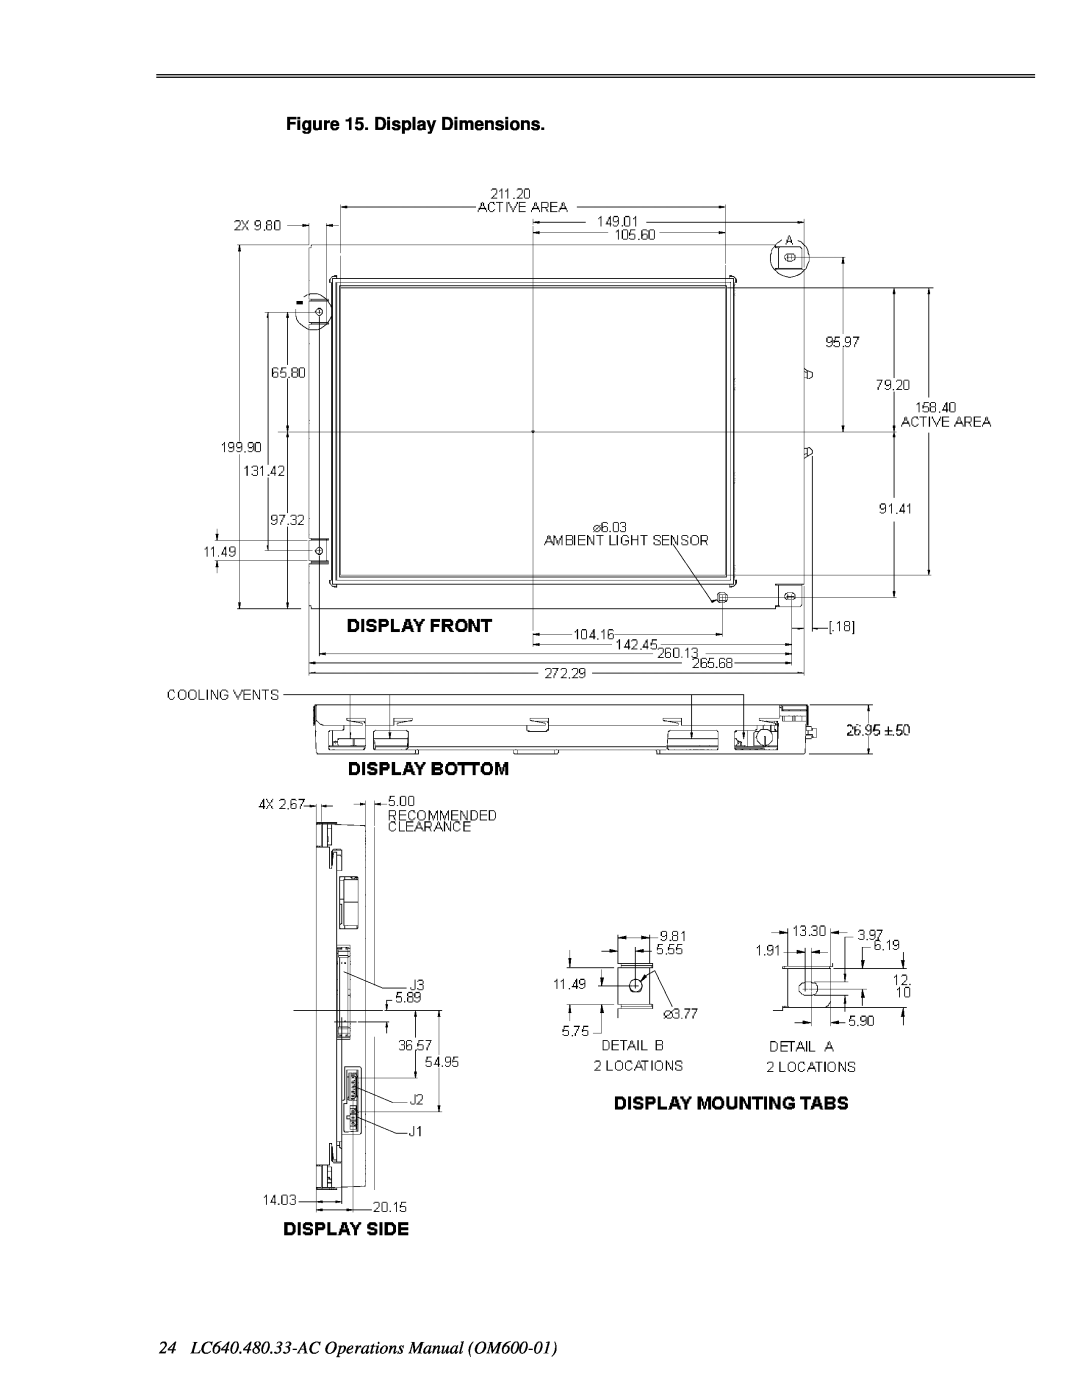 Planar manual Display Dimensions, 24 LC640.480.33-AC Operations Manual OM600-01 